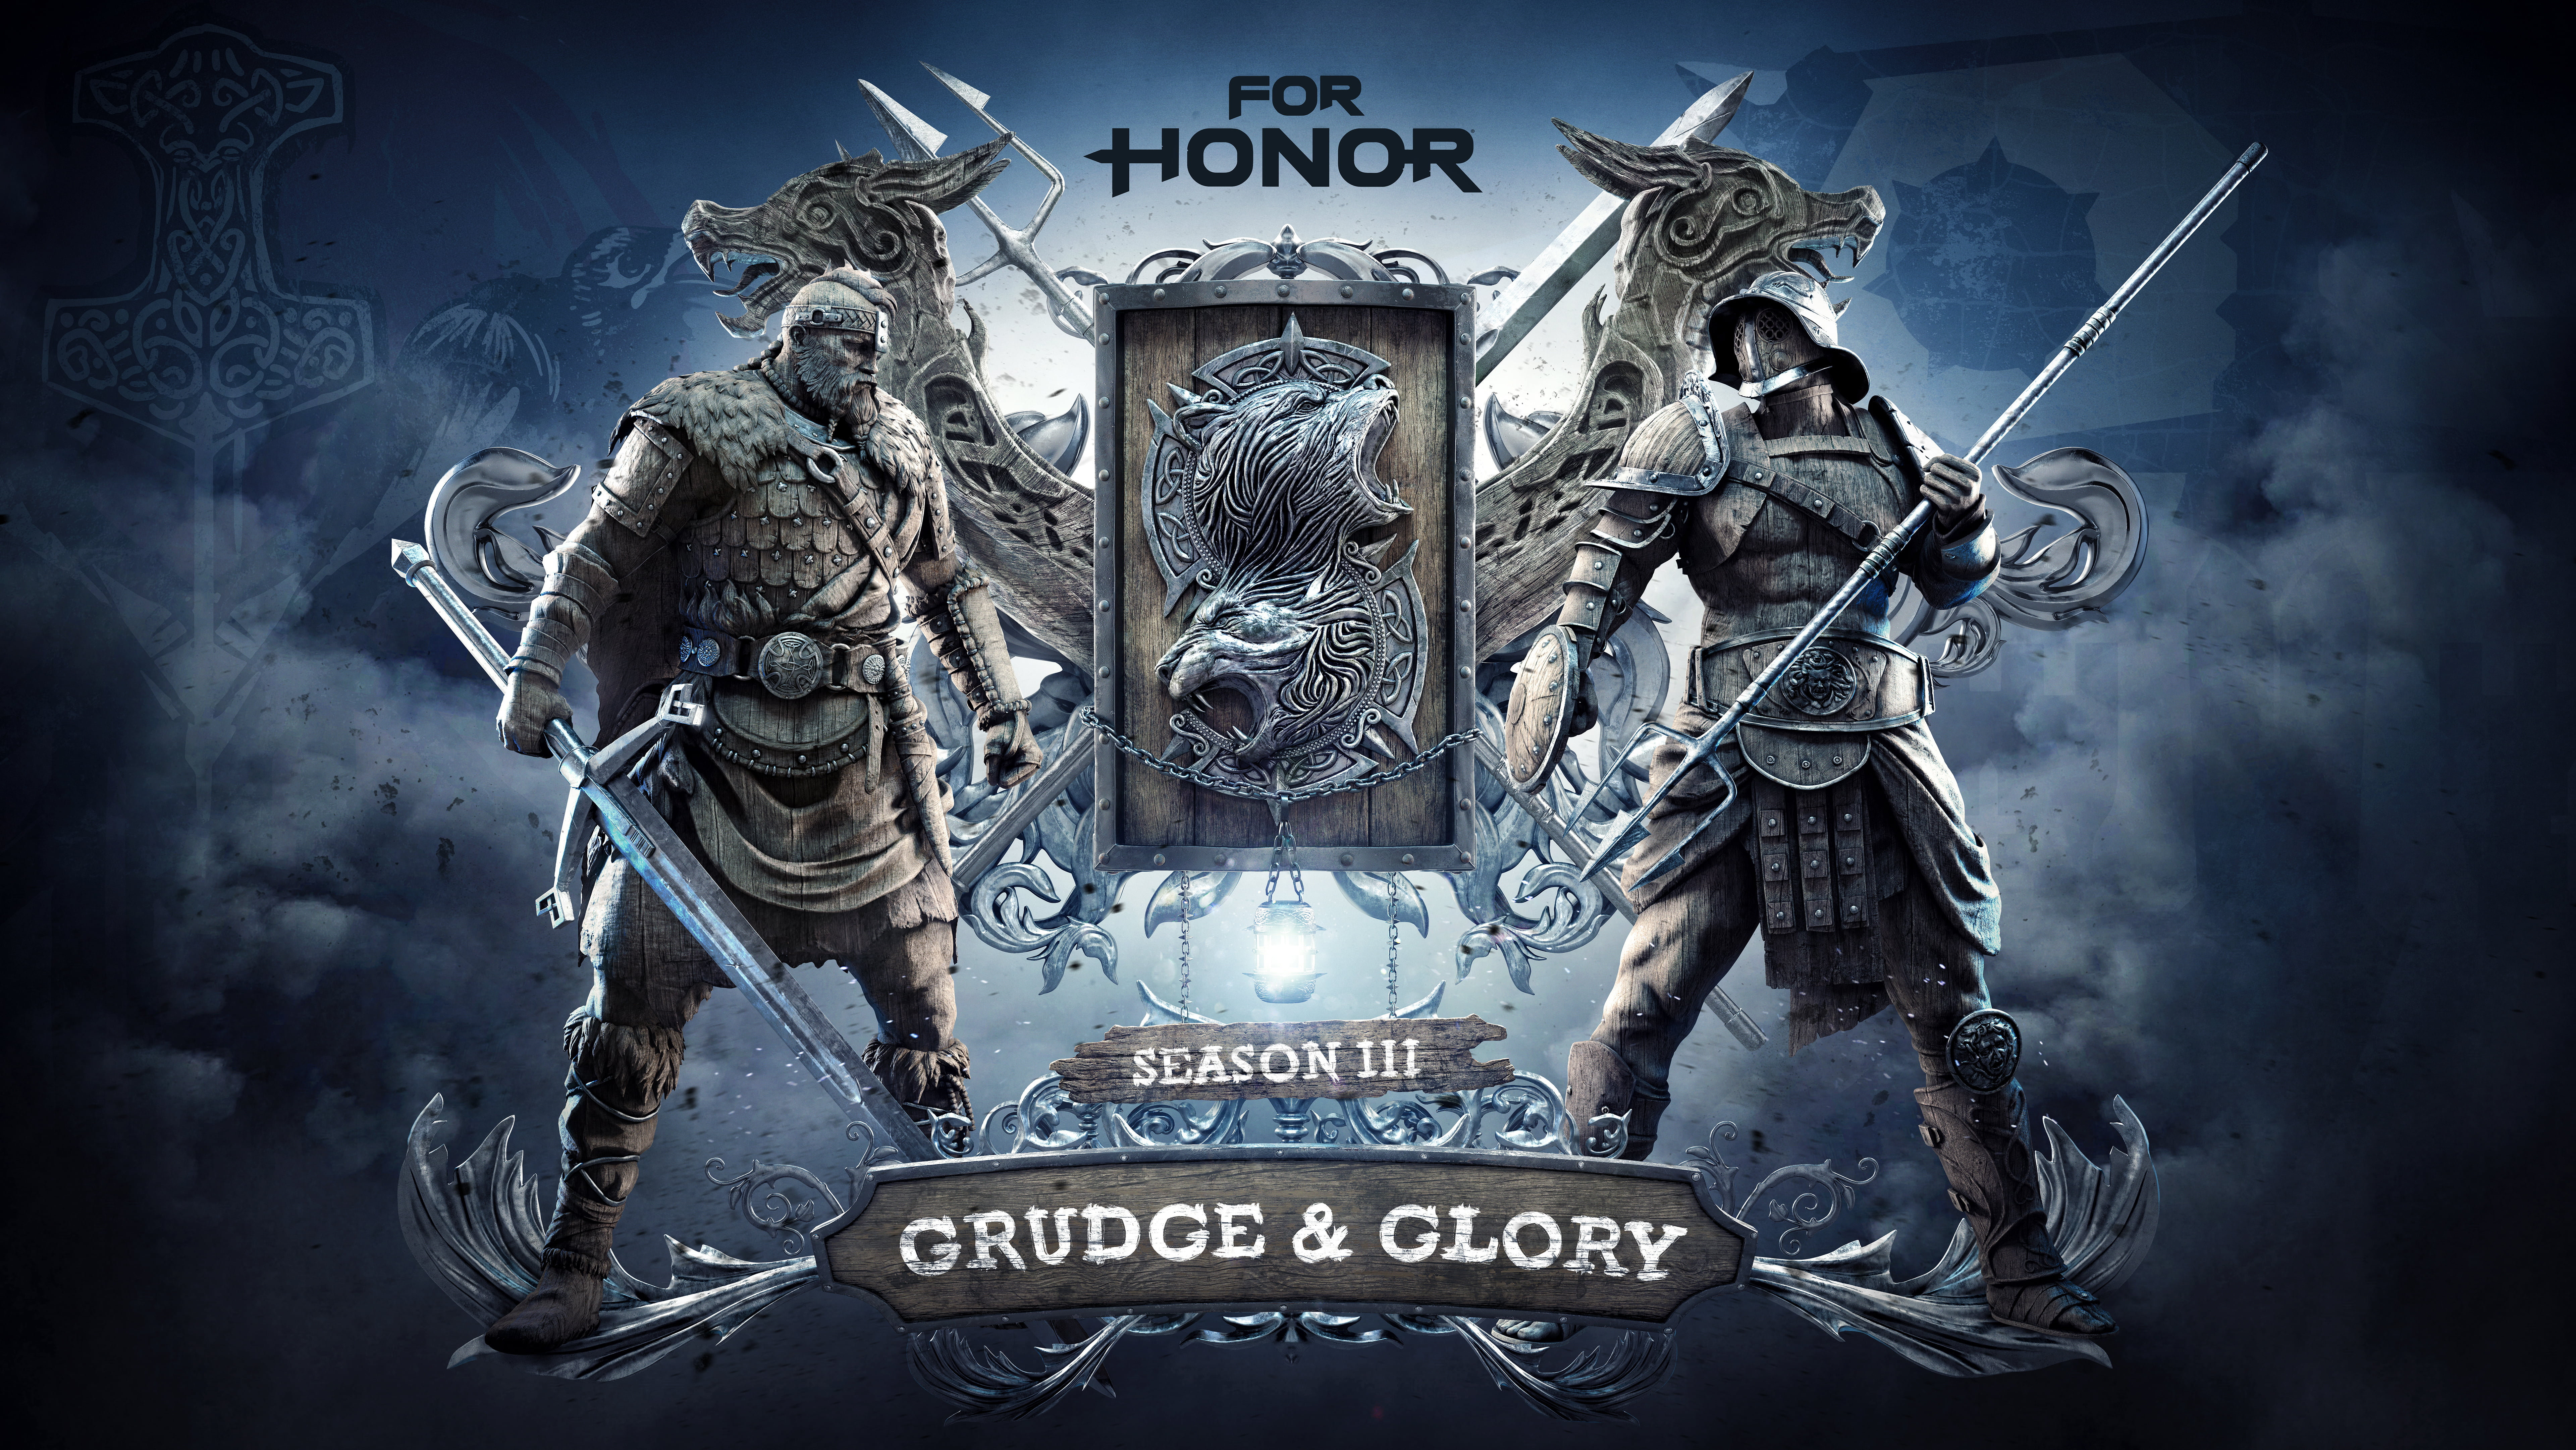 For Honor Season III Grudge & Glory